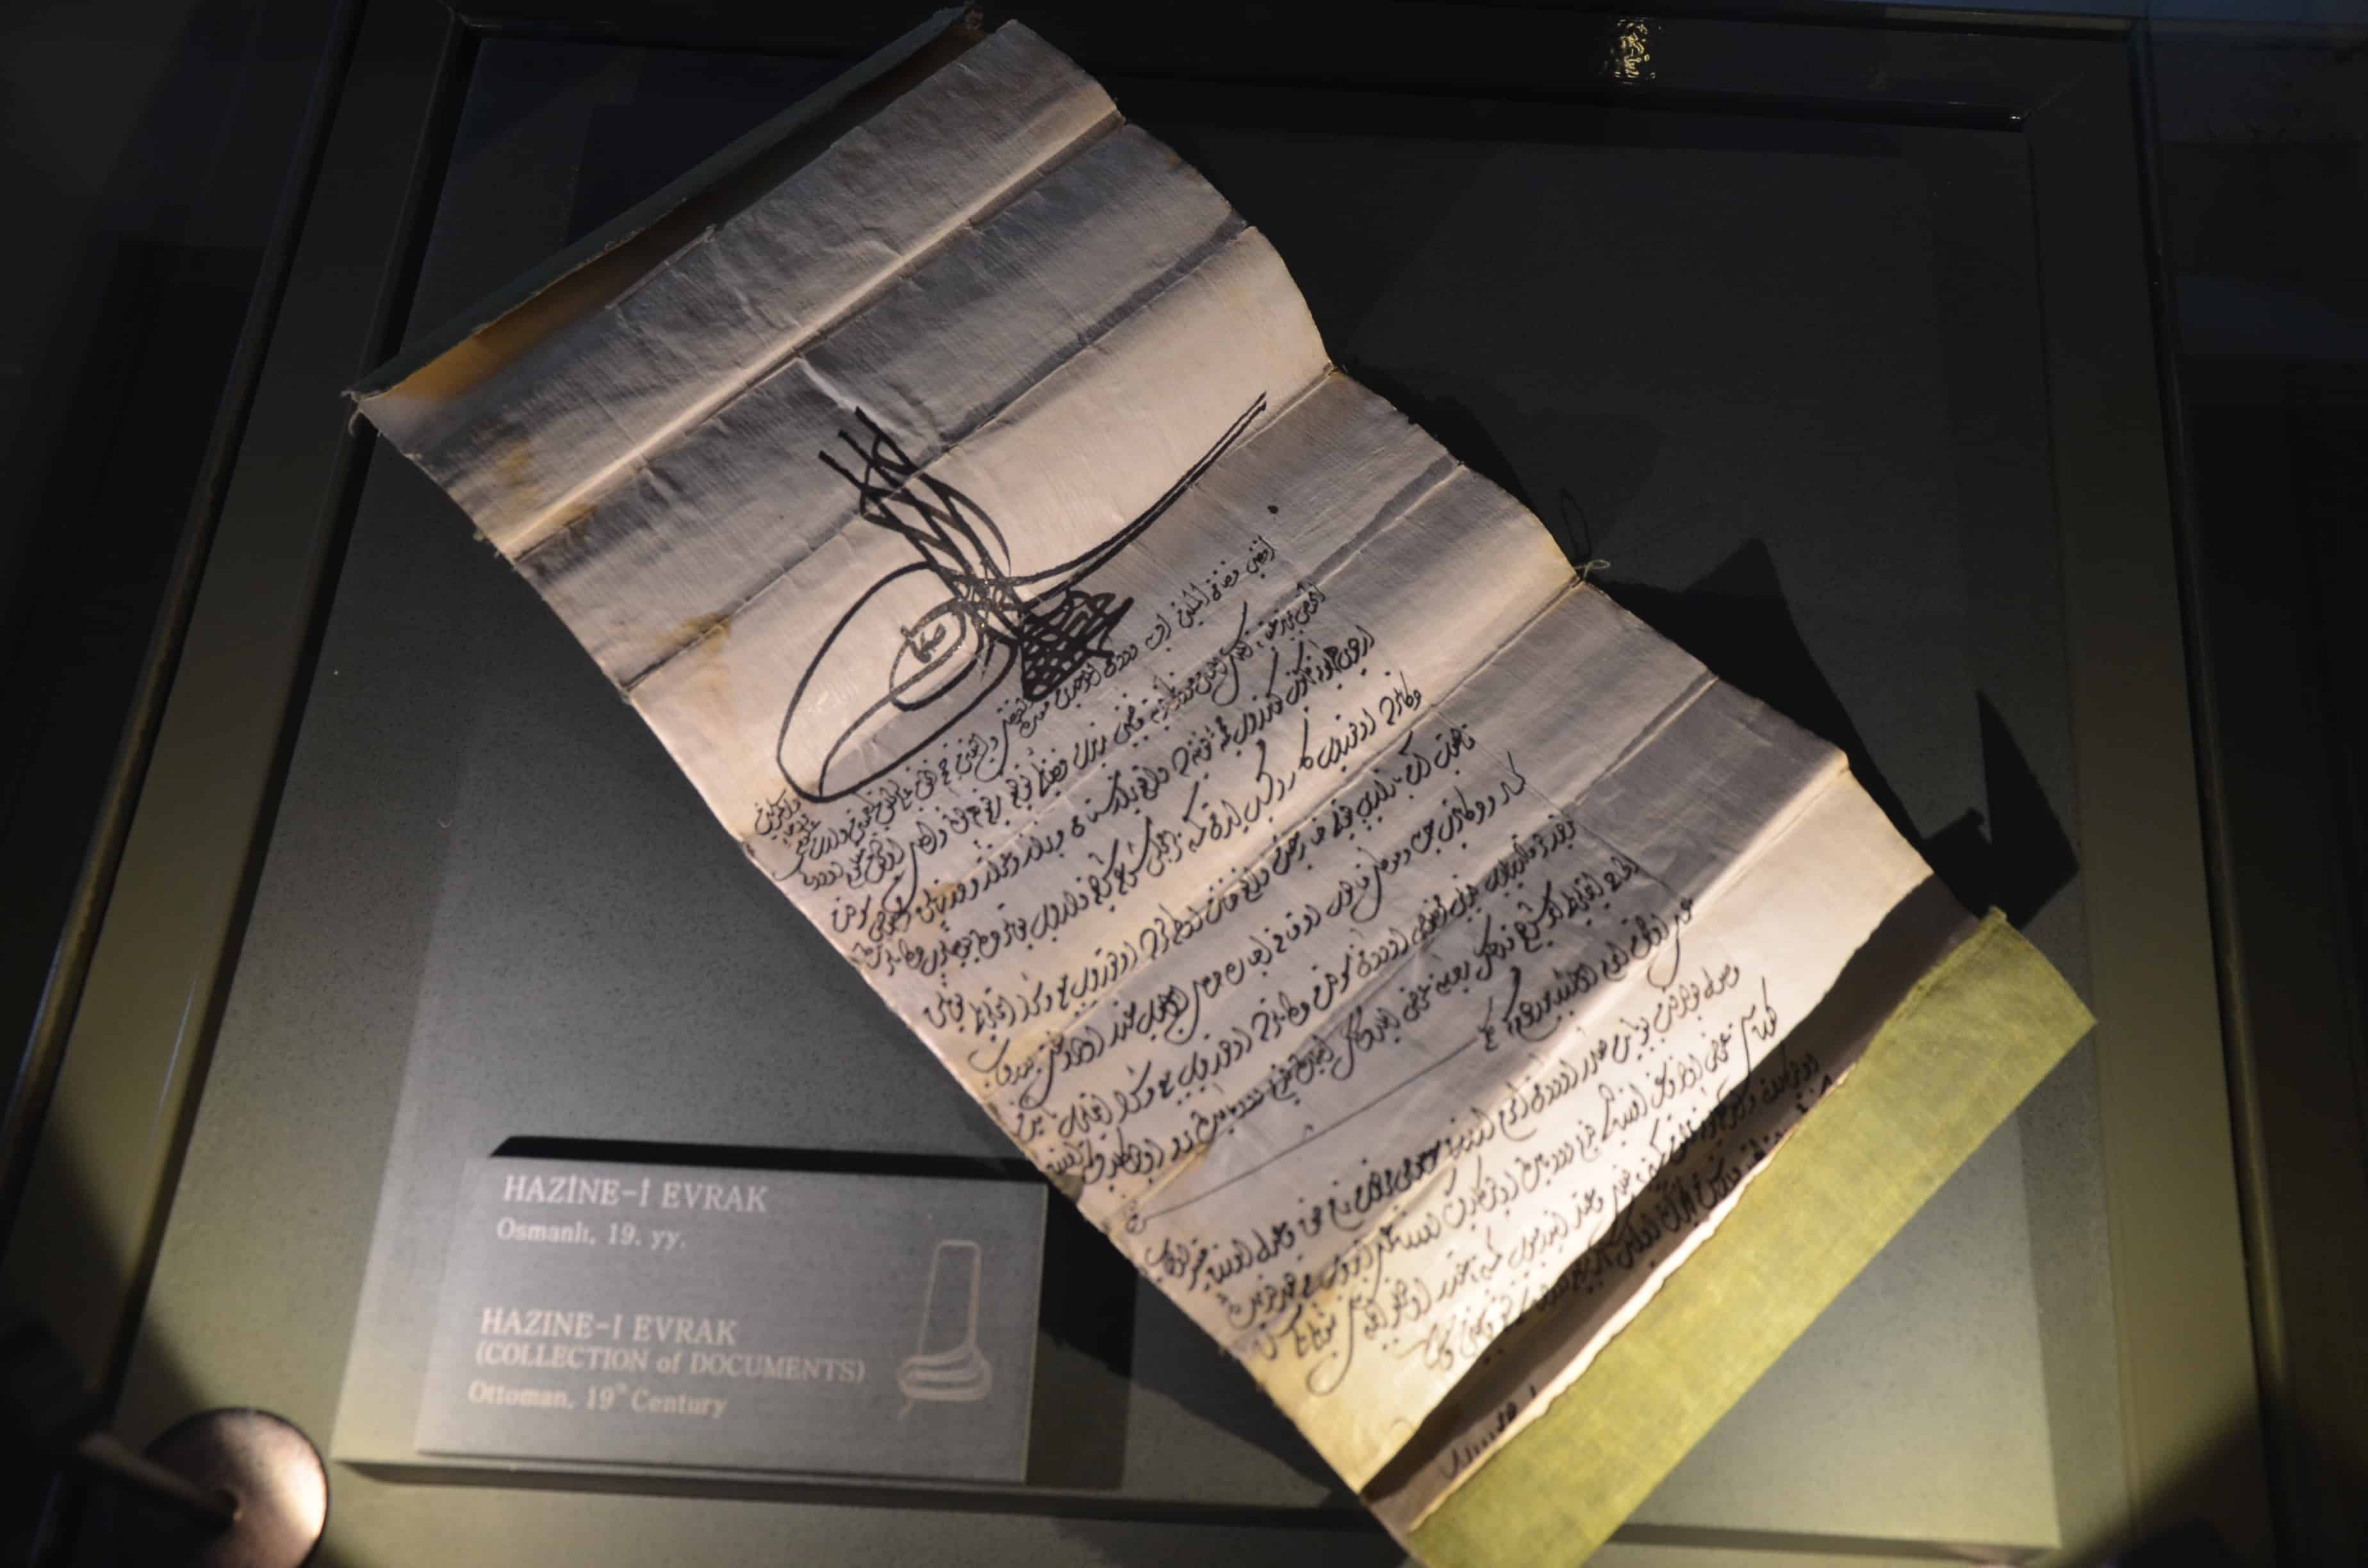 19th century Ottoman document at the Mevlana Museum in Konya, Turkey